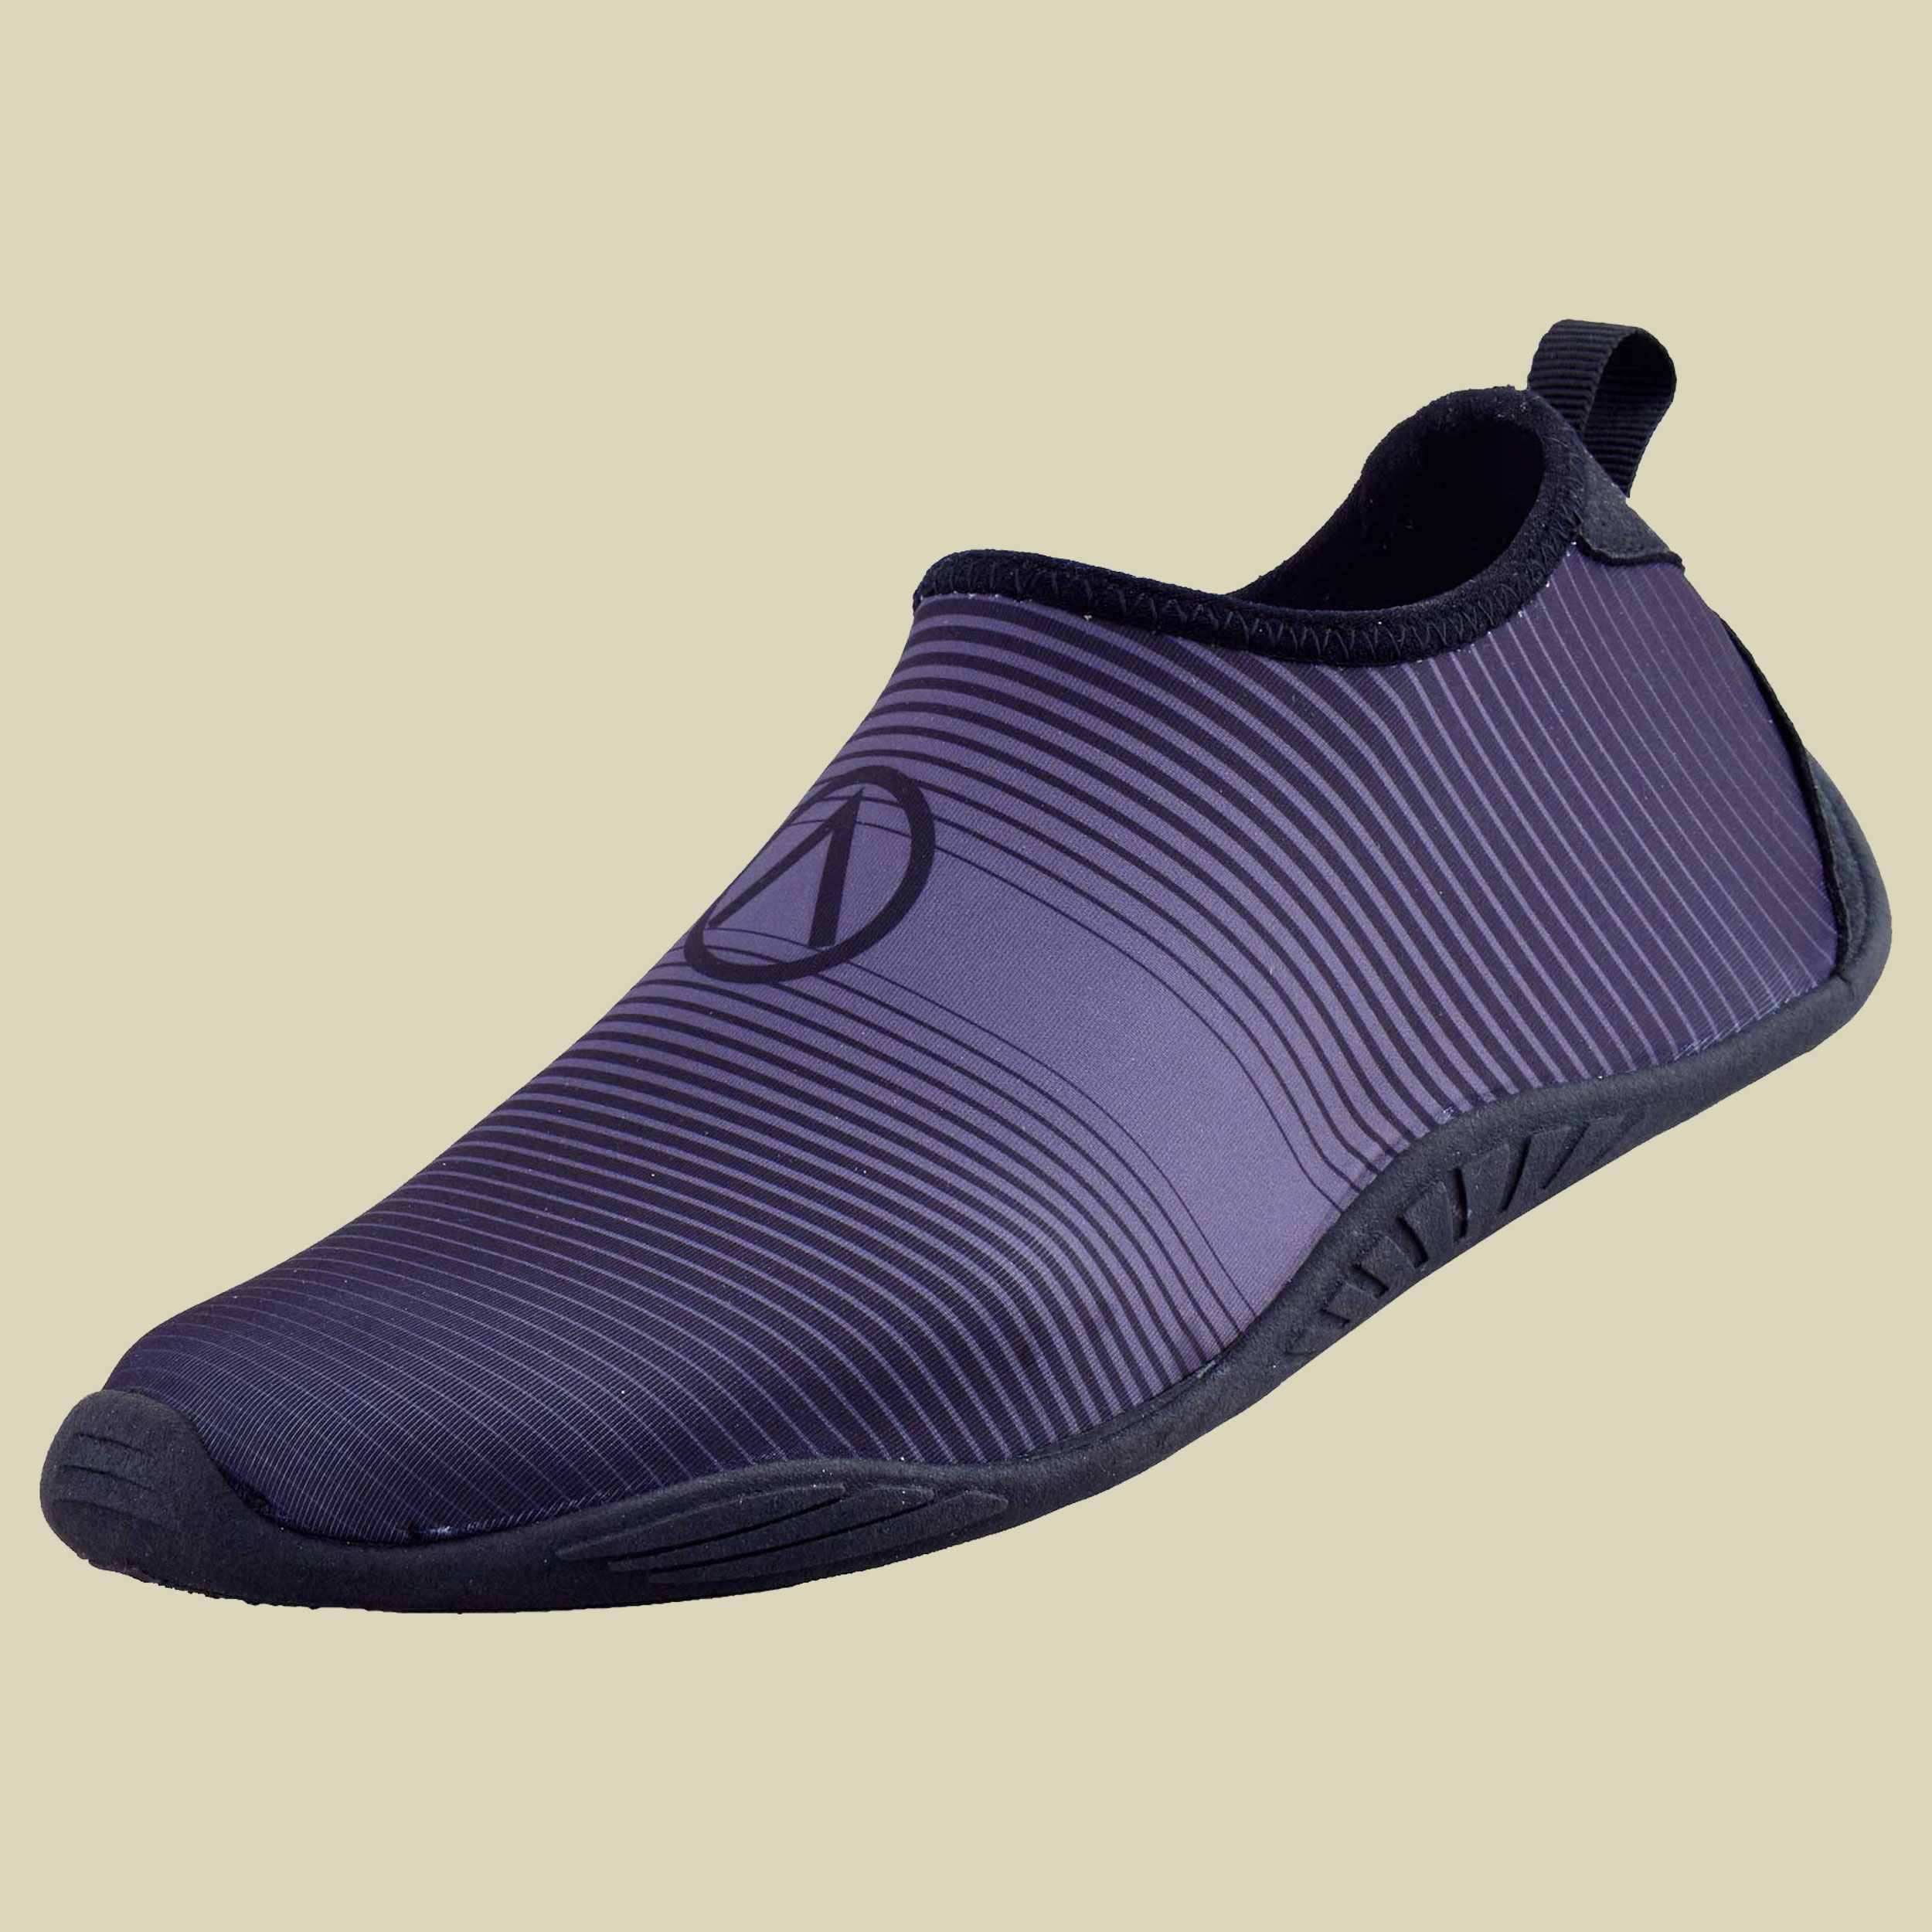 Spartan Barfuß-Schuhe Größe 37,5-38 Farbe astro black